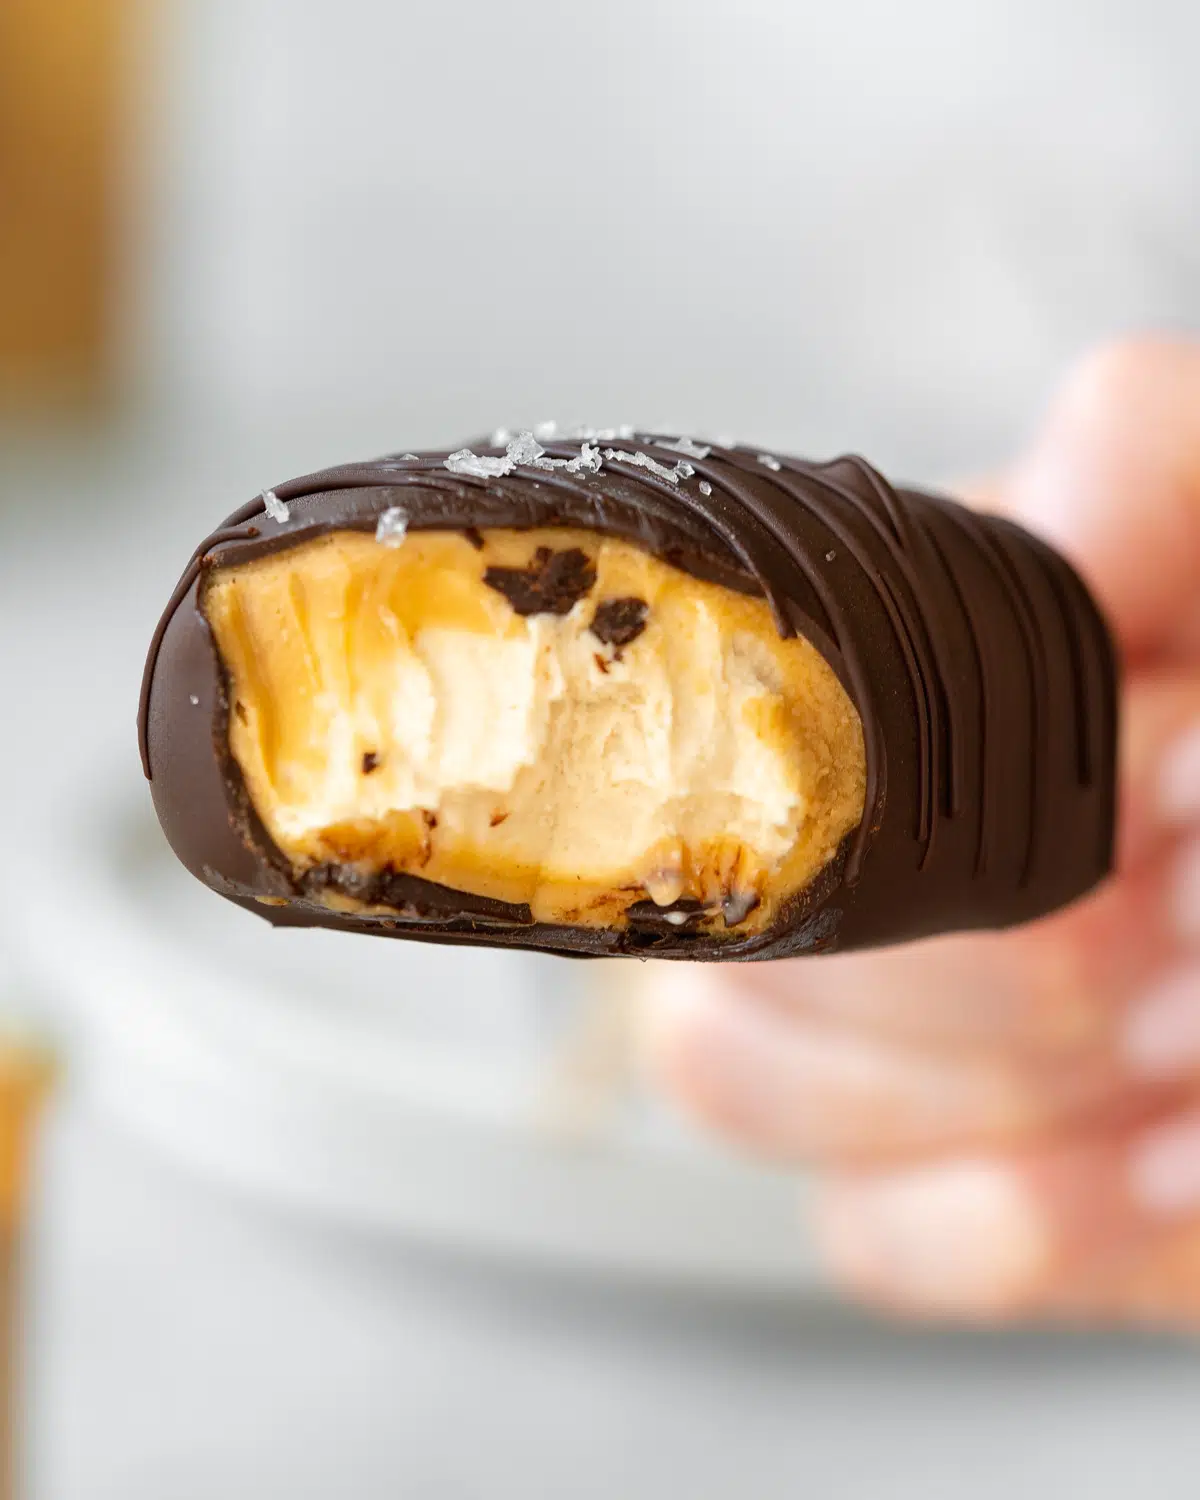 magnum ice cream bar with peanut butter.